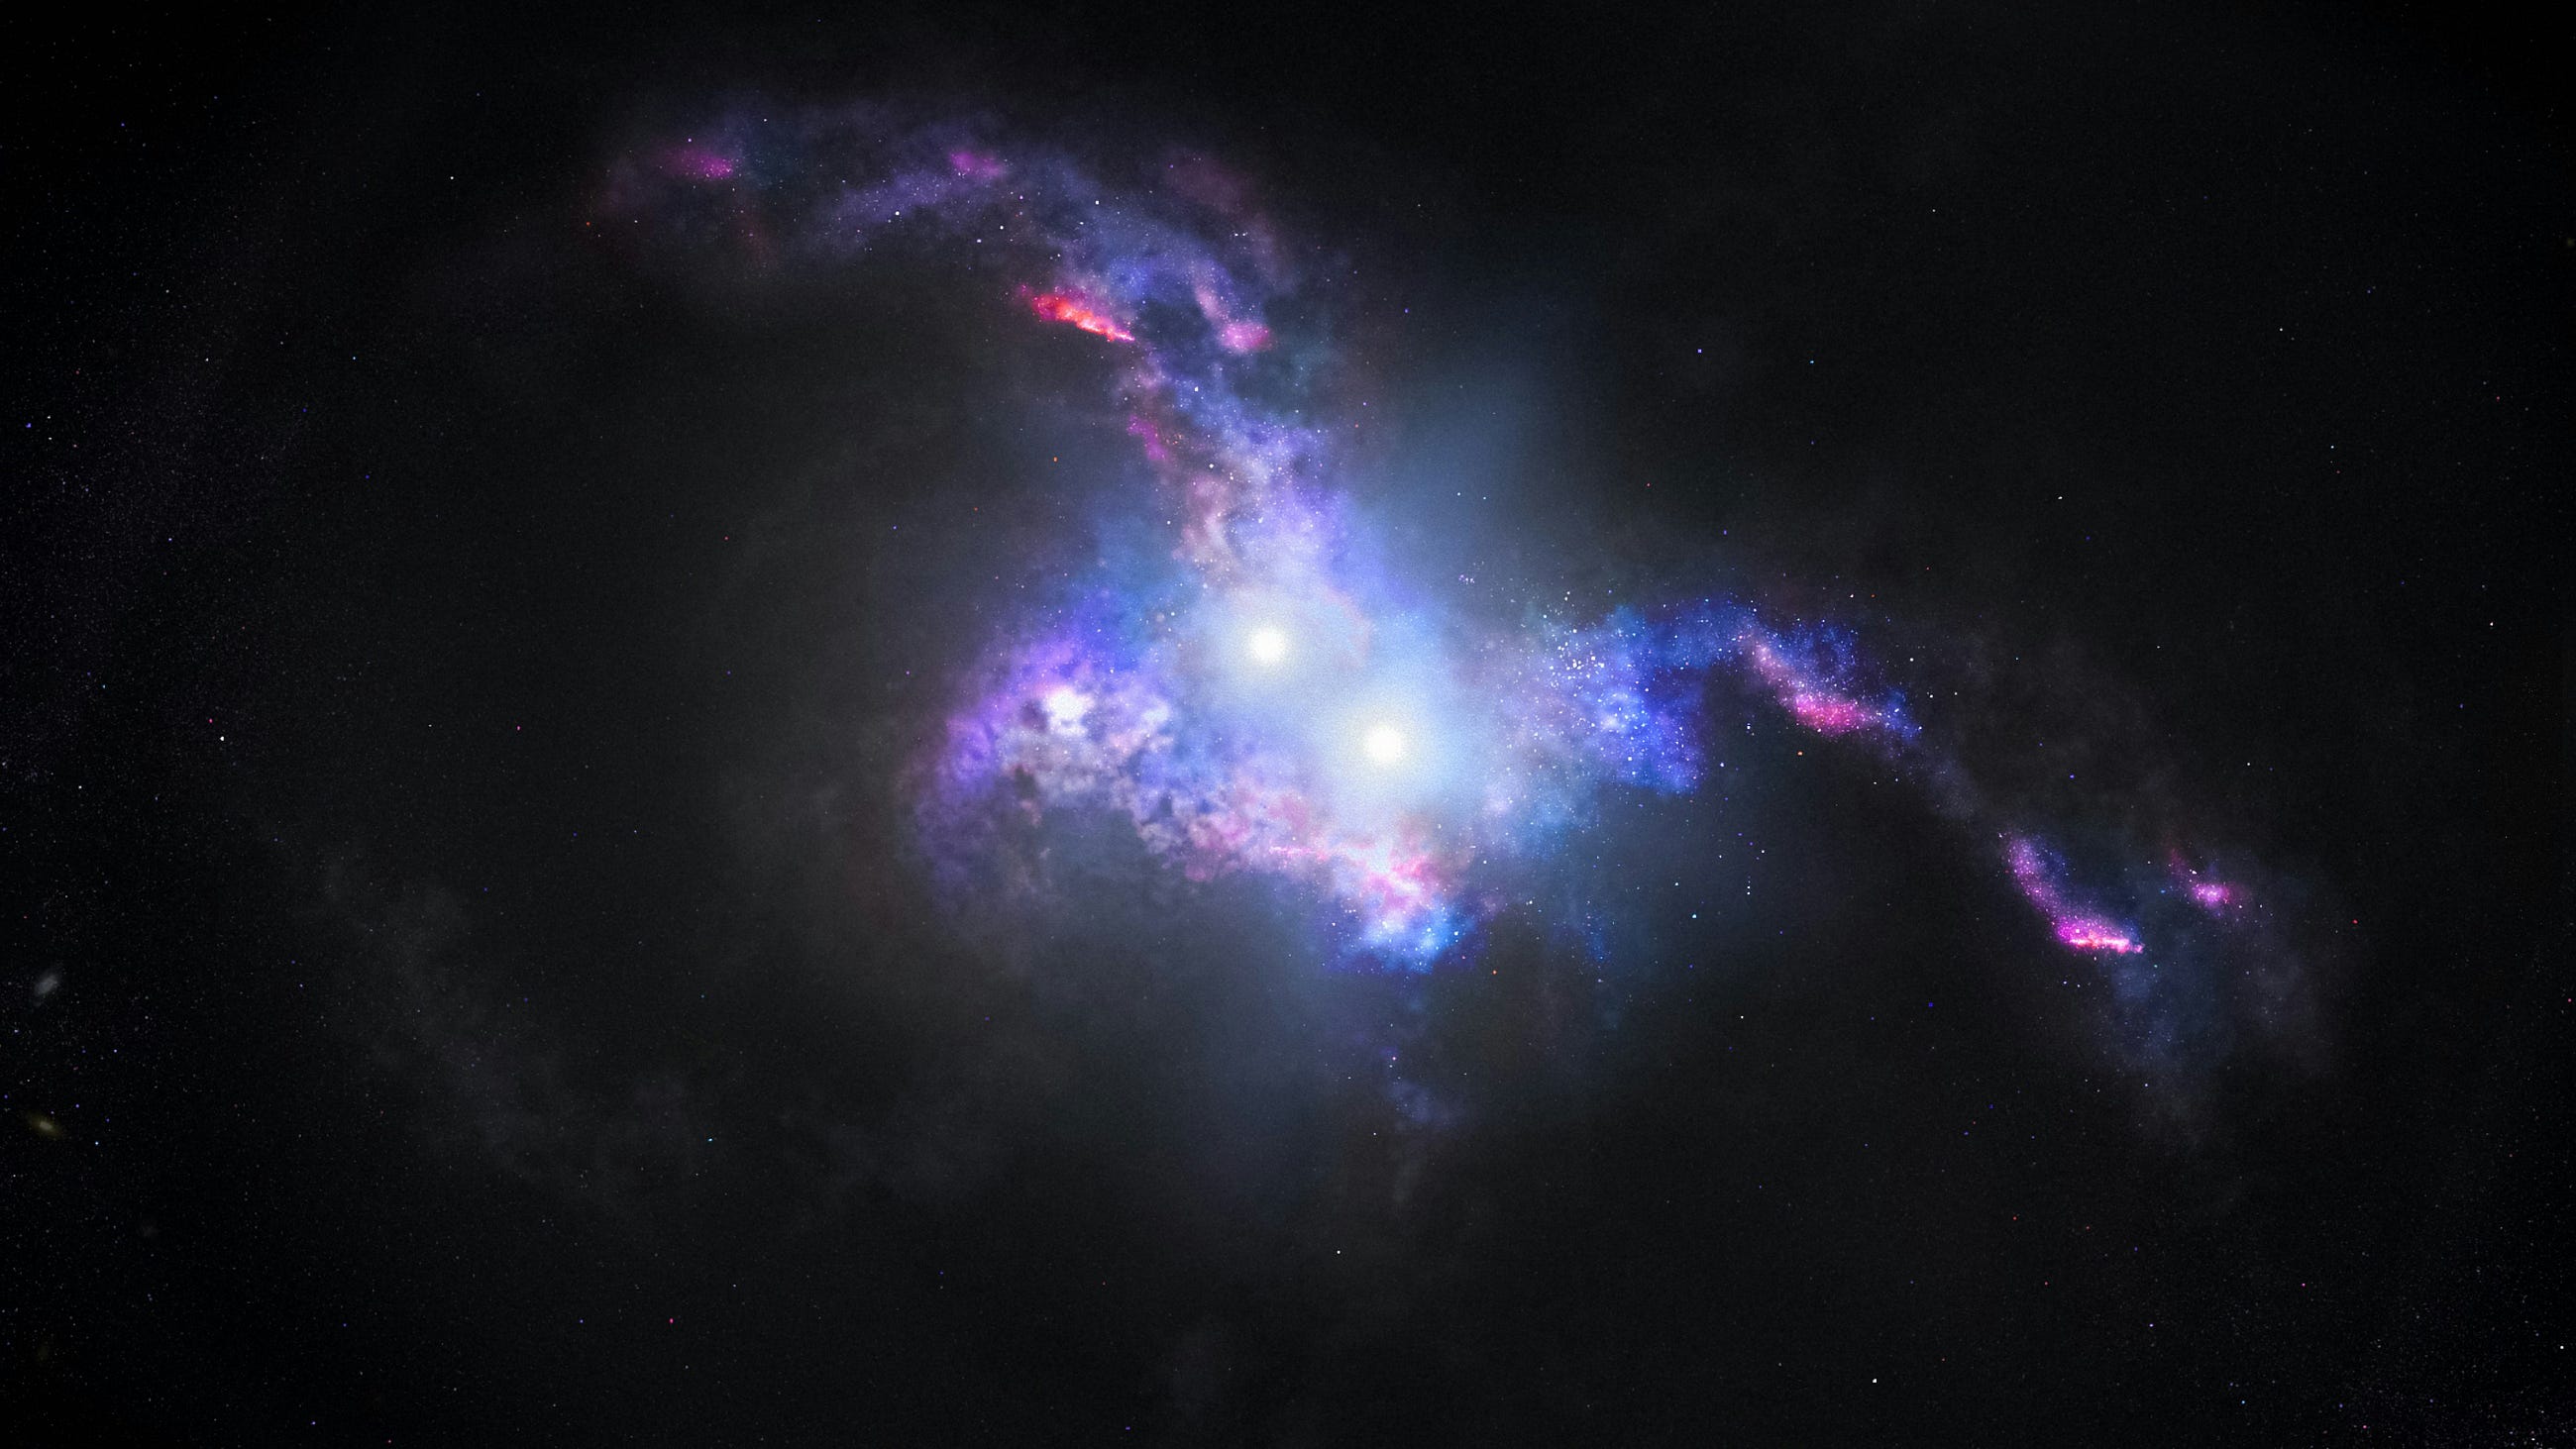 Photo by NASA Hubble SpGolox credit loan Customer care helpline number